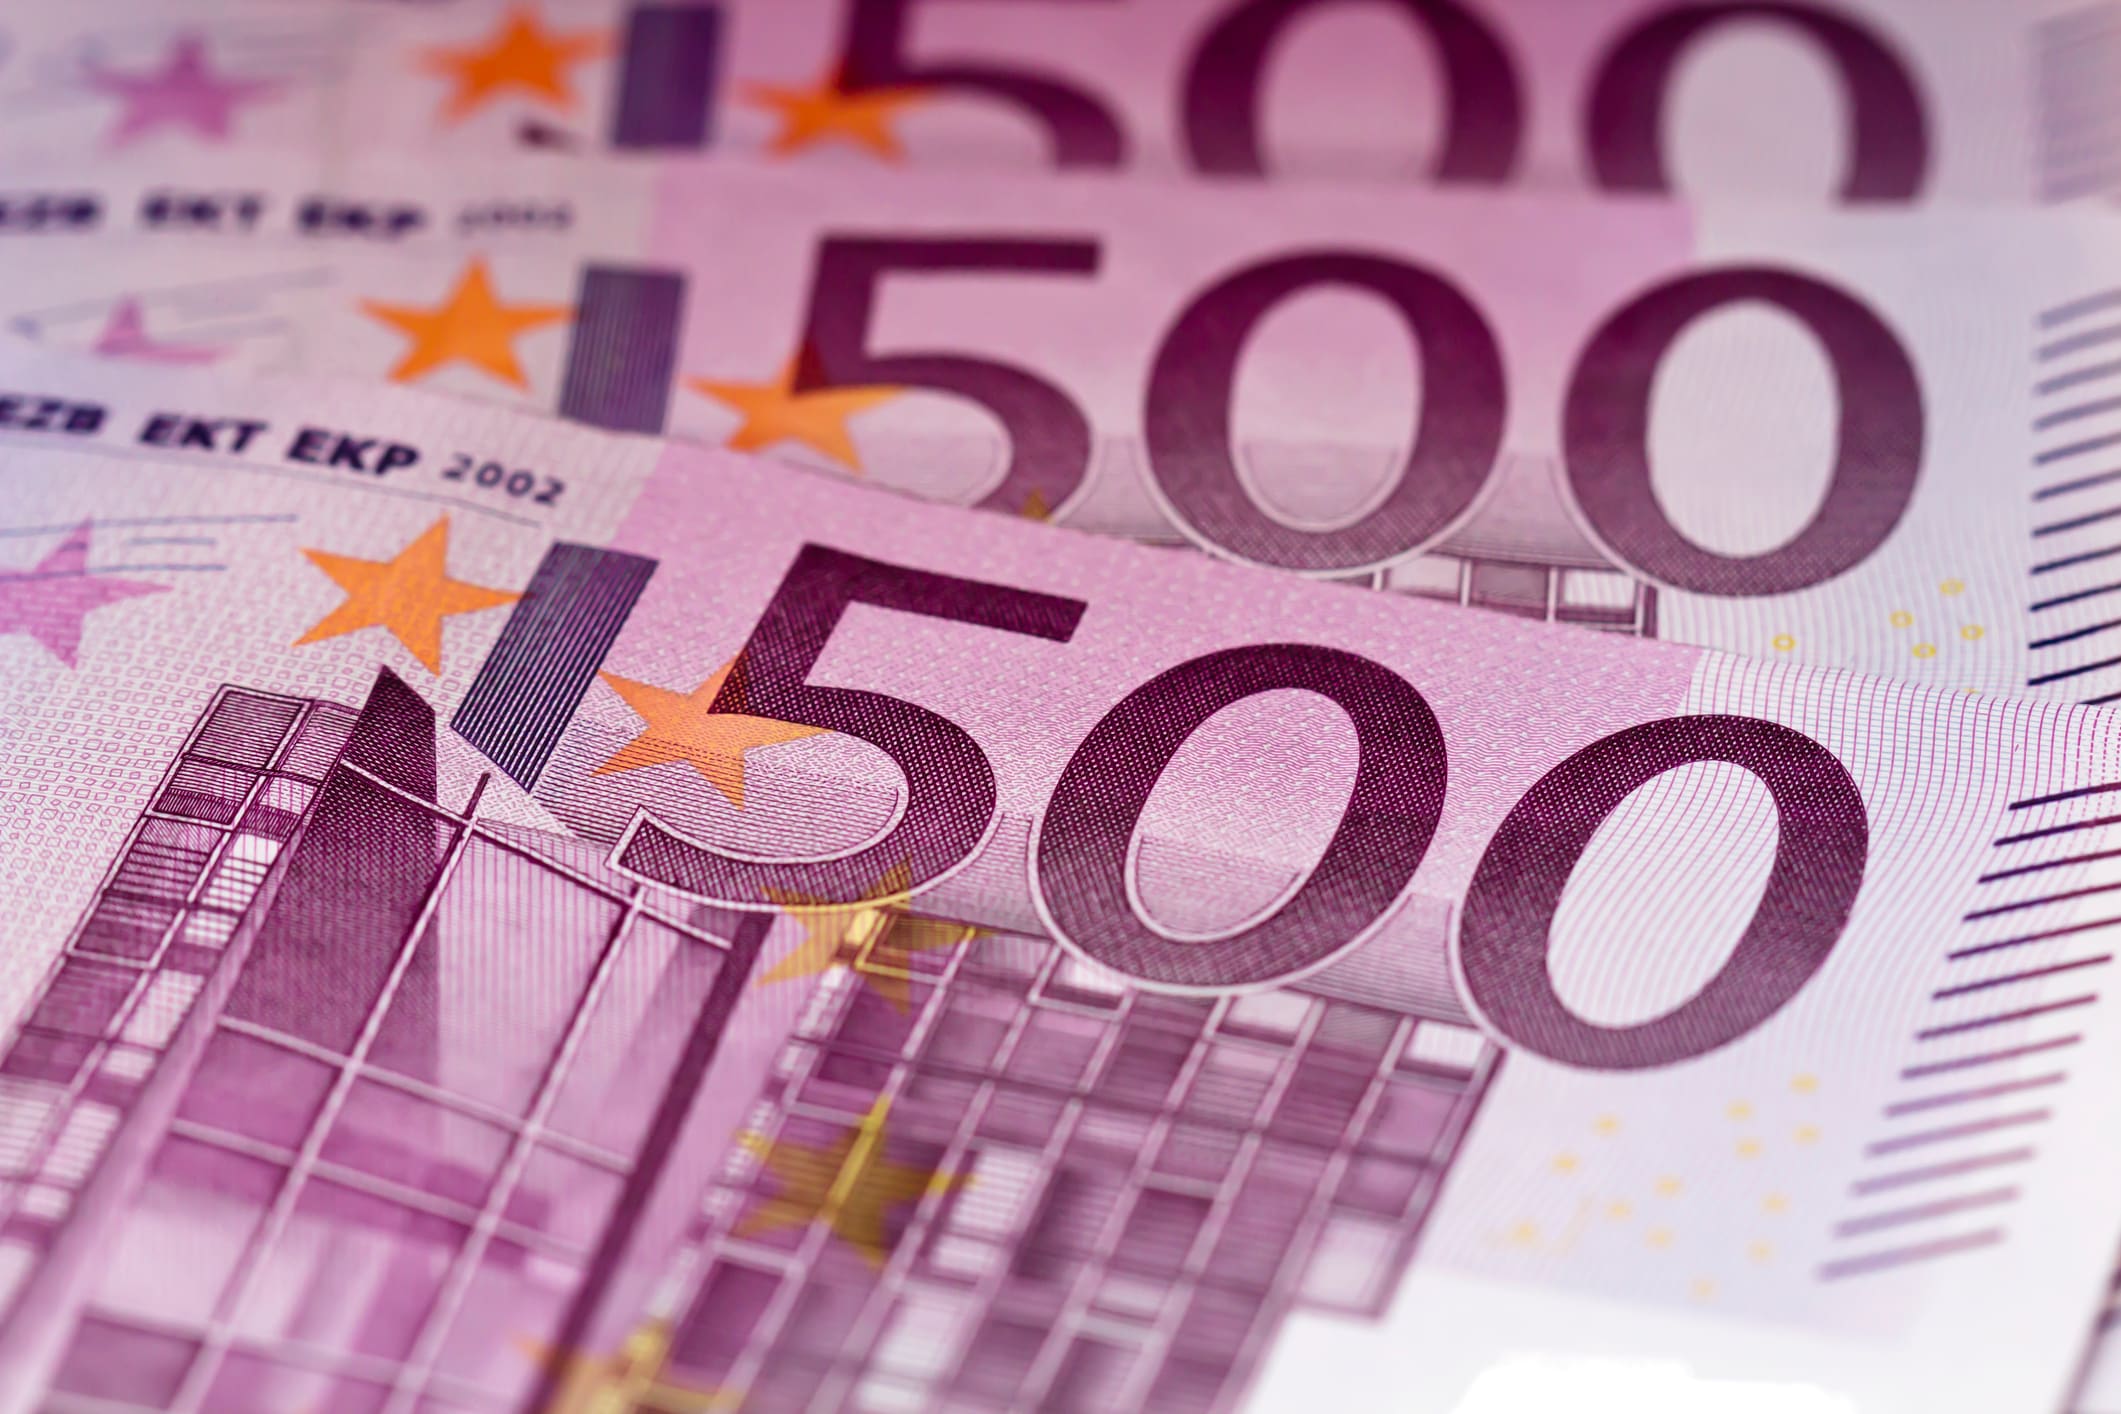 Zwitserse politie treft 500-eurobiljetten aan in meerdere wc's